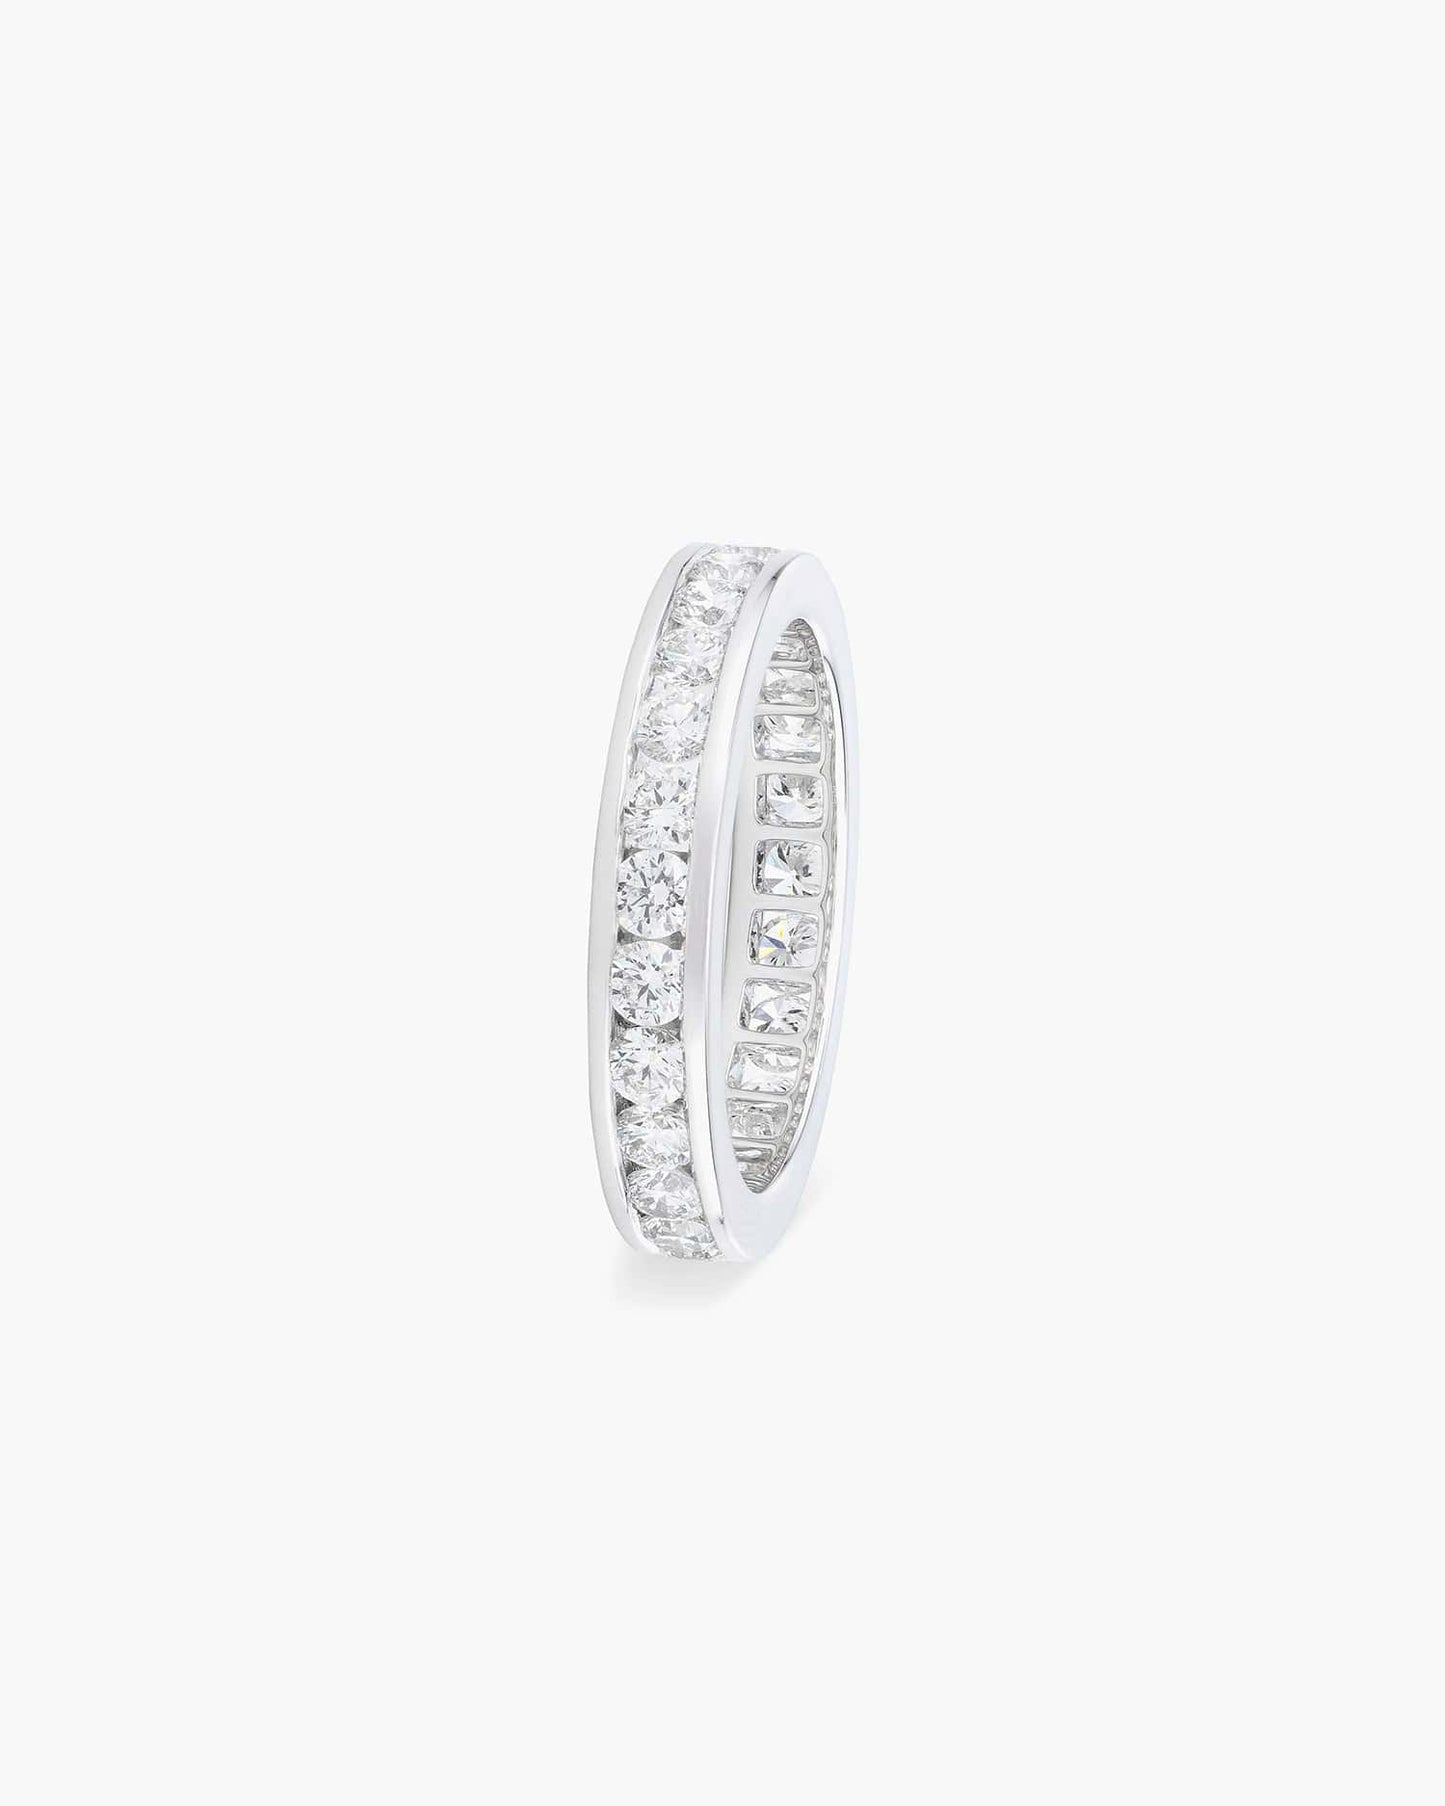 Round Brilliant Cut Diamond Eternity Ring (0.06 carat)